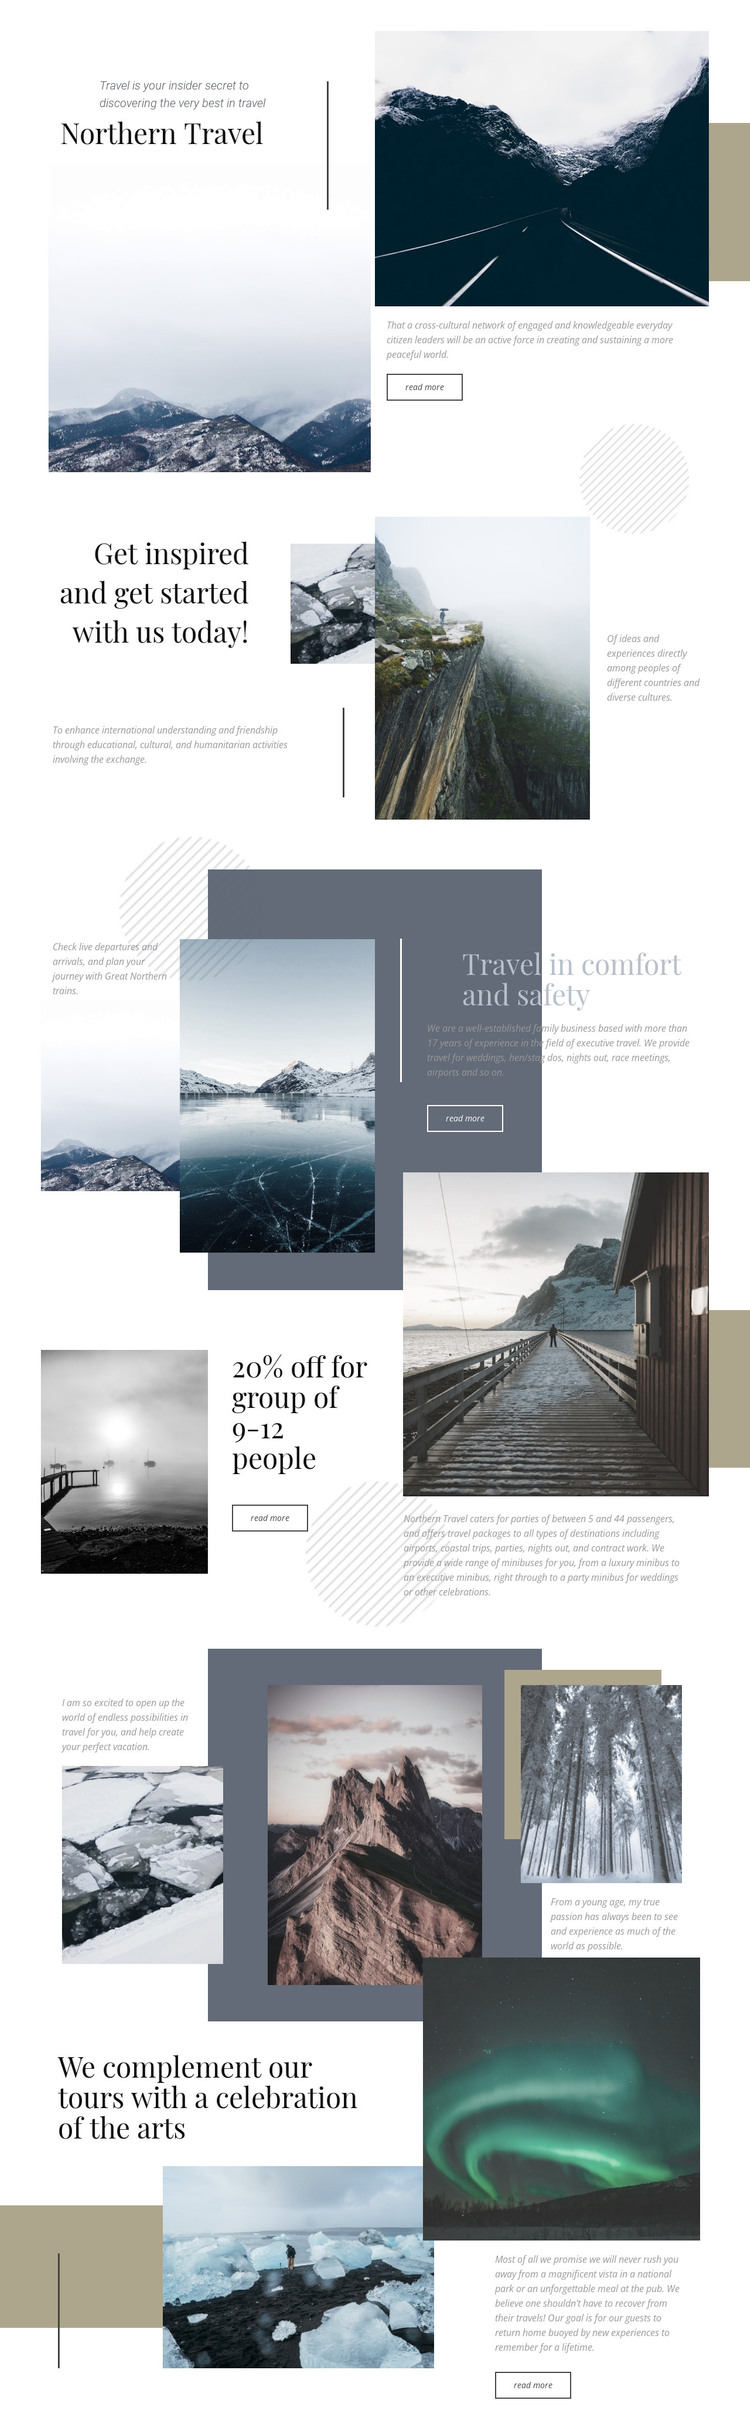 Northern Travel WordPress Theme